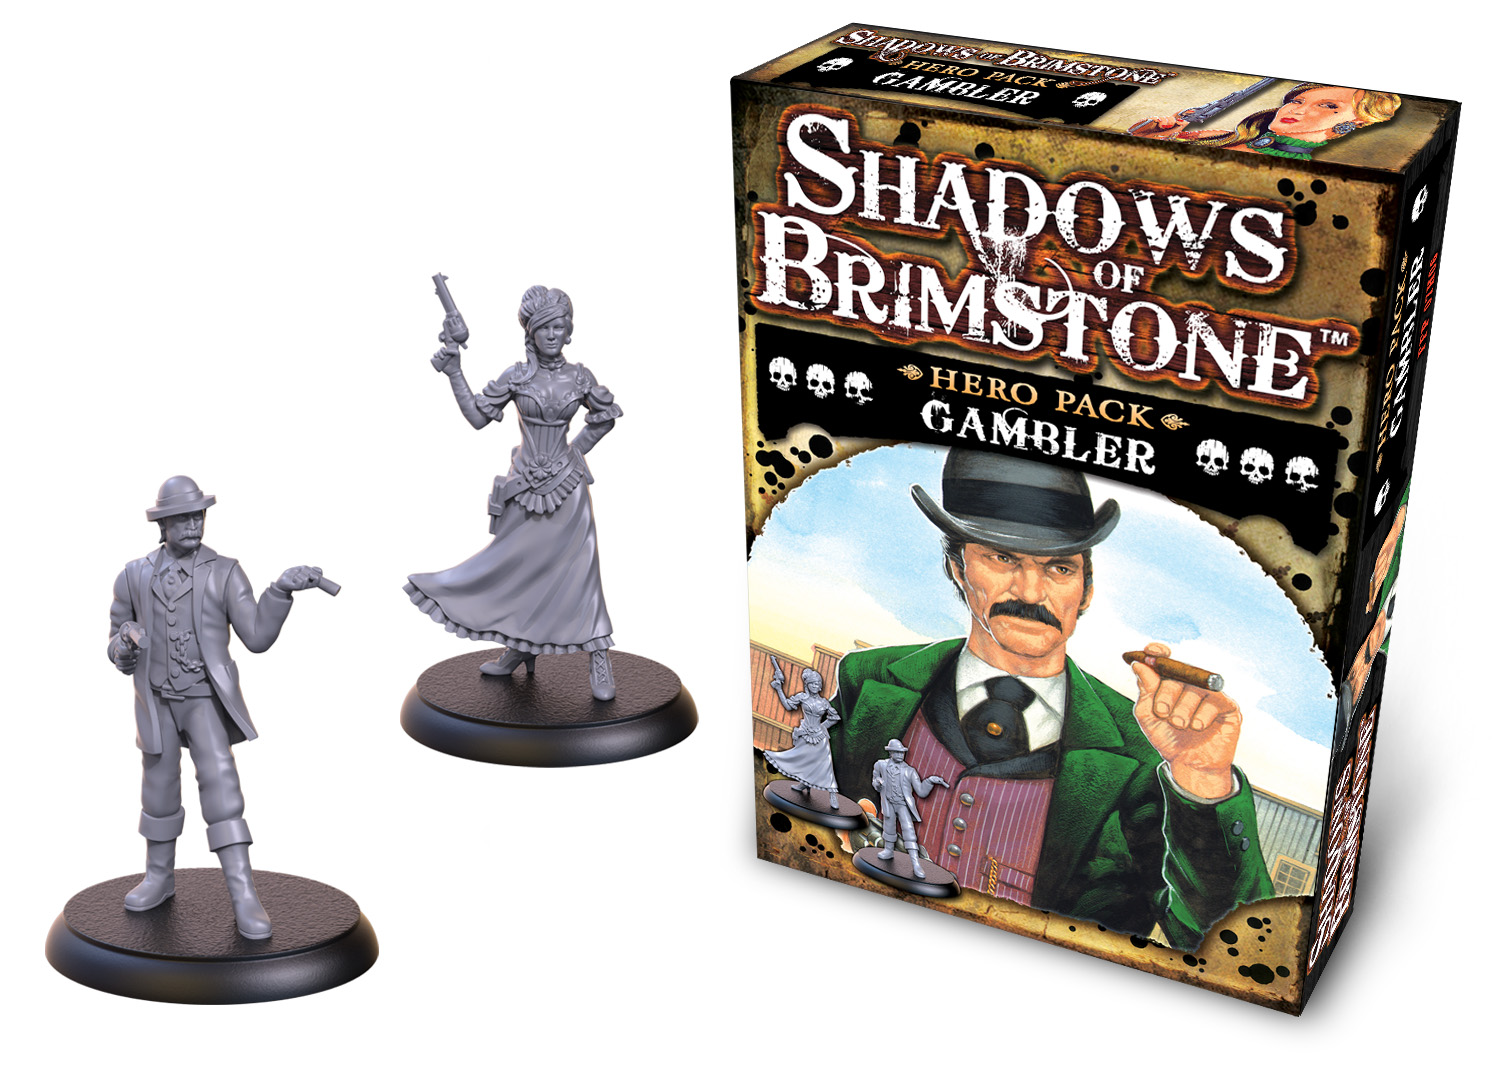 Shadows of Brimstone: Hero Pack: Gambler  